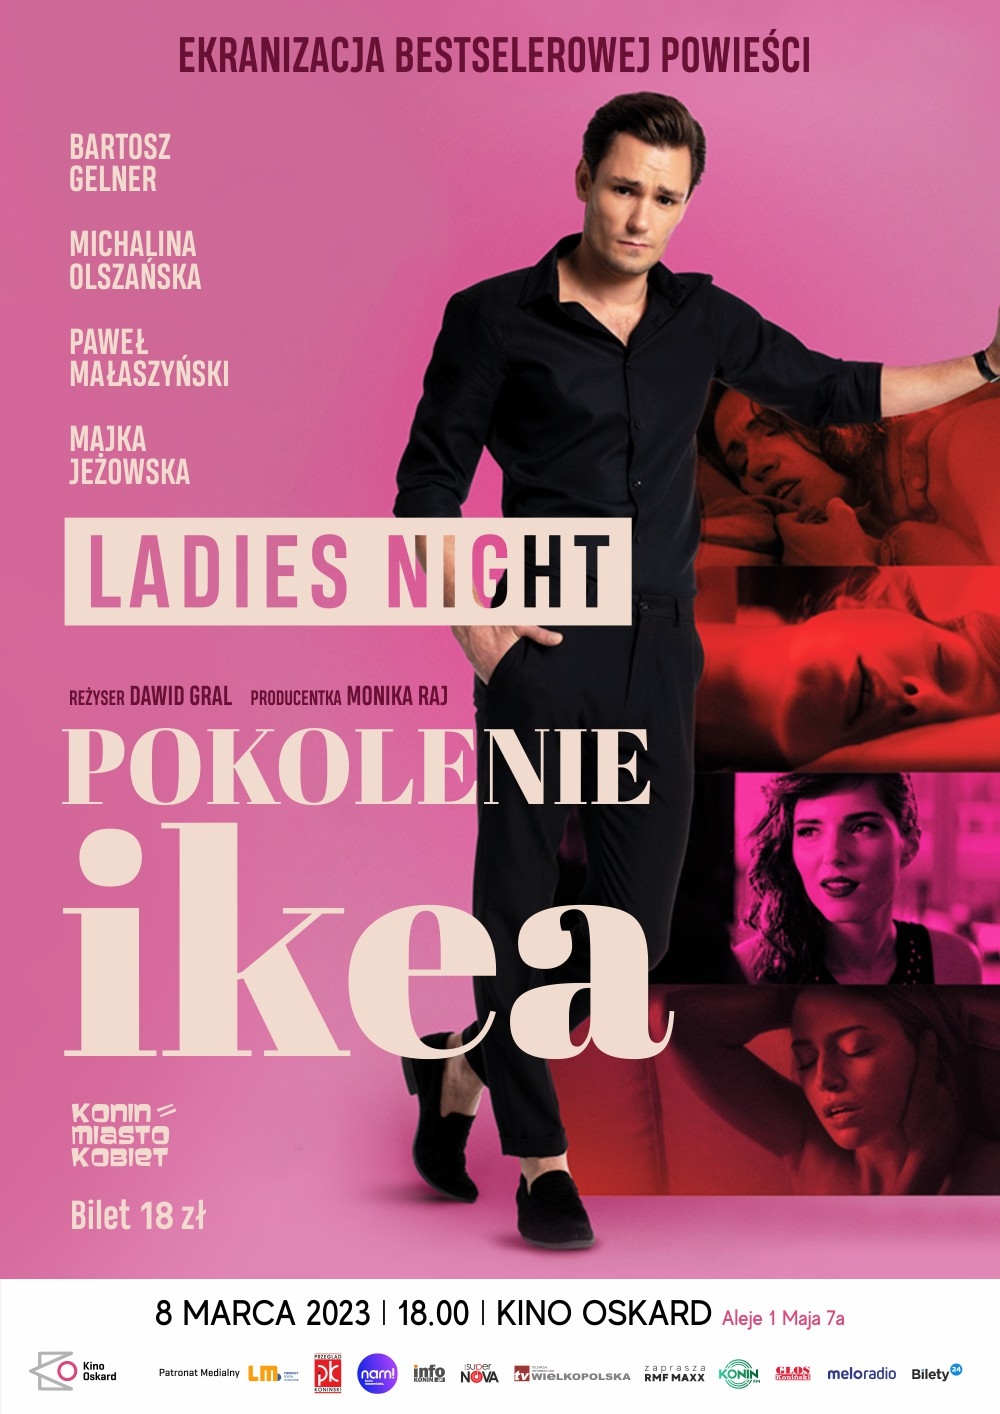 Ladies Night: Pokolenie Ikea